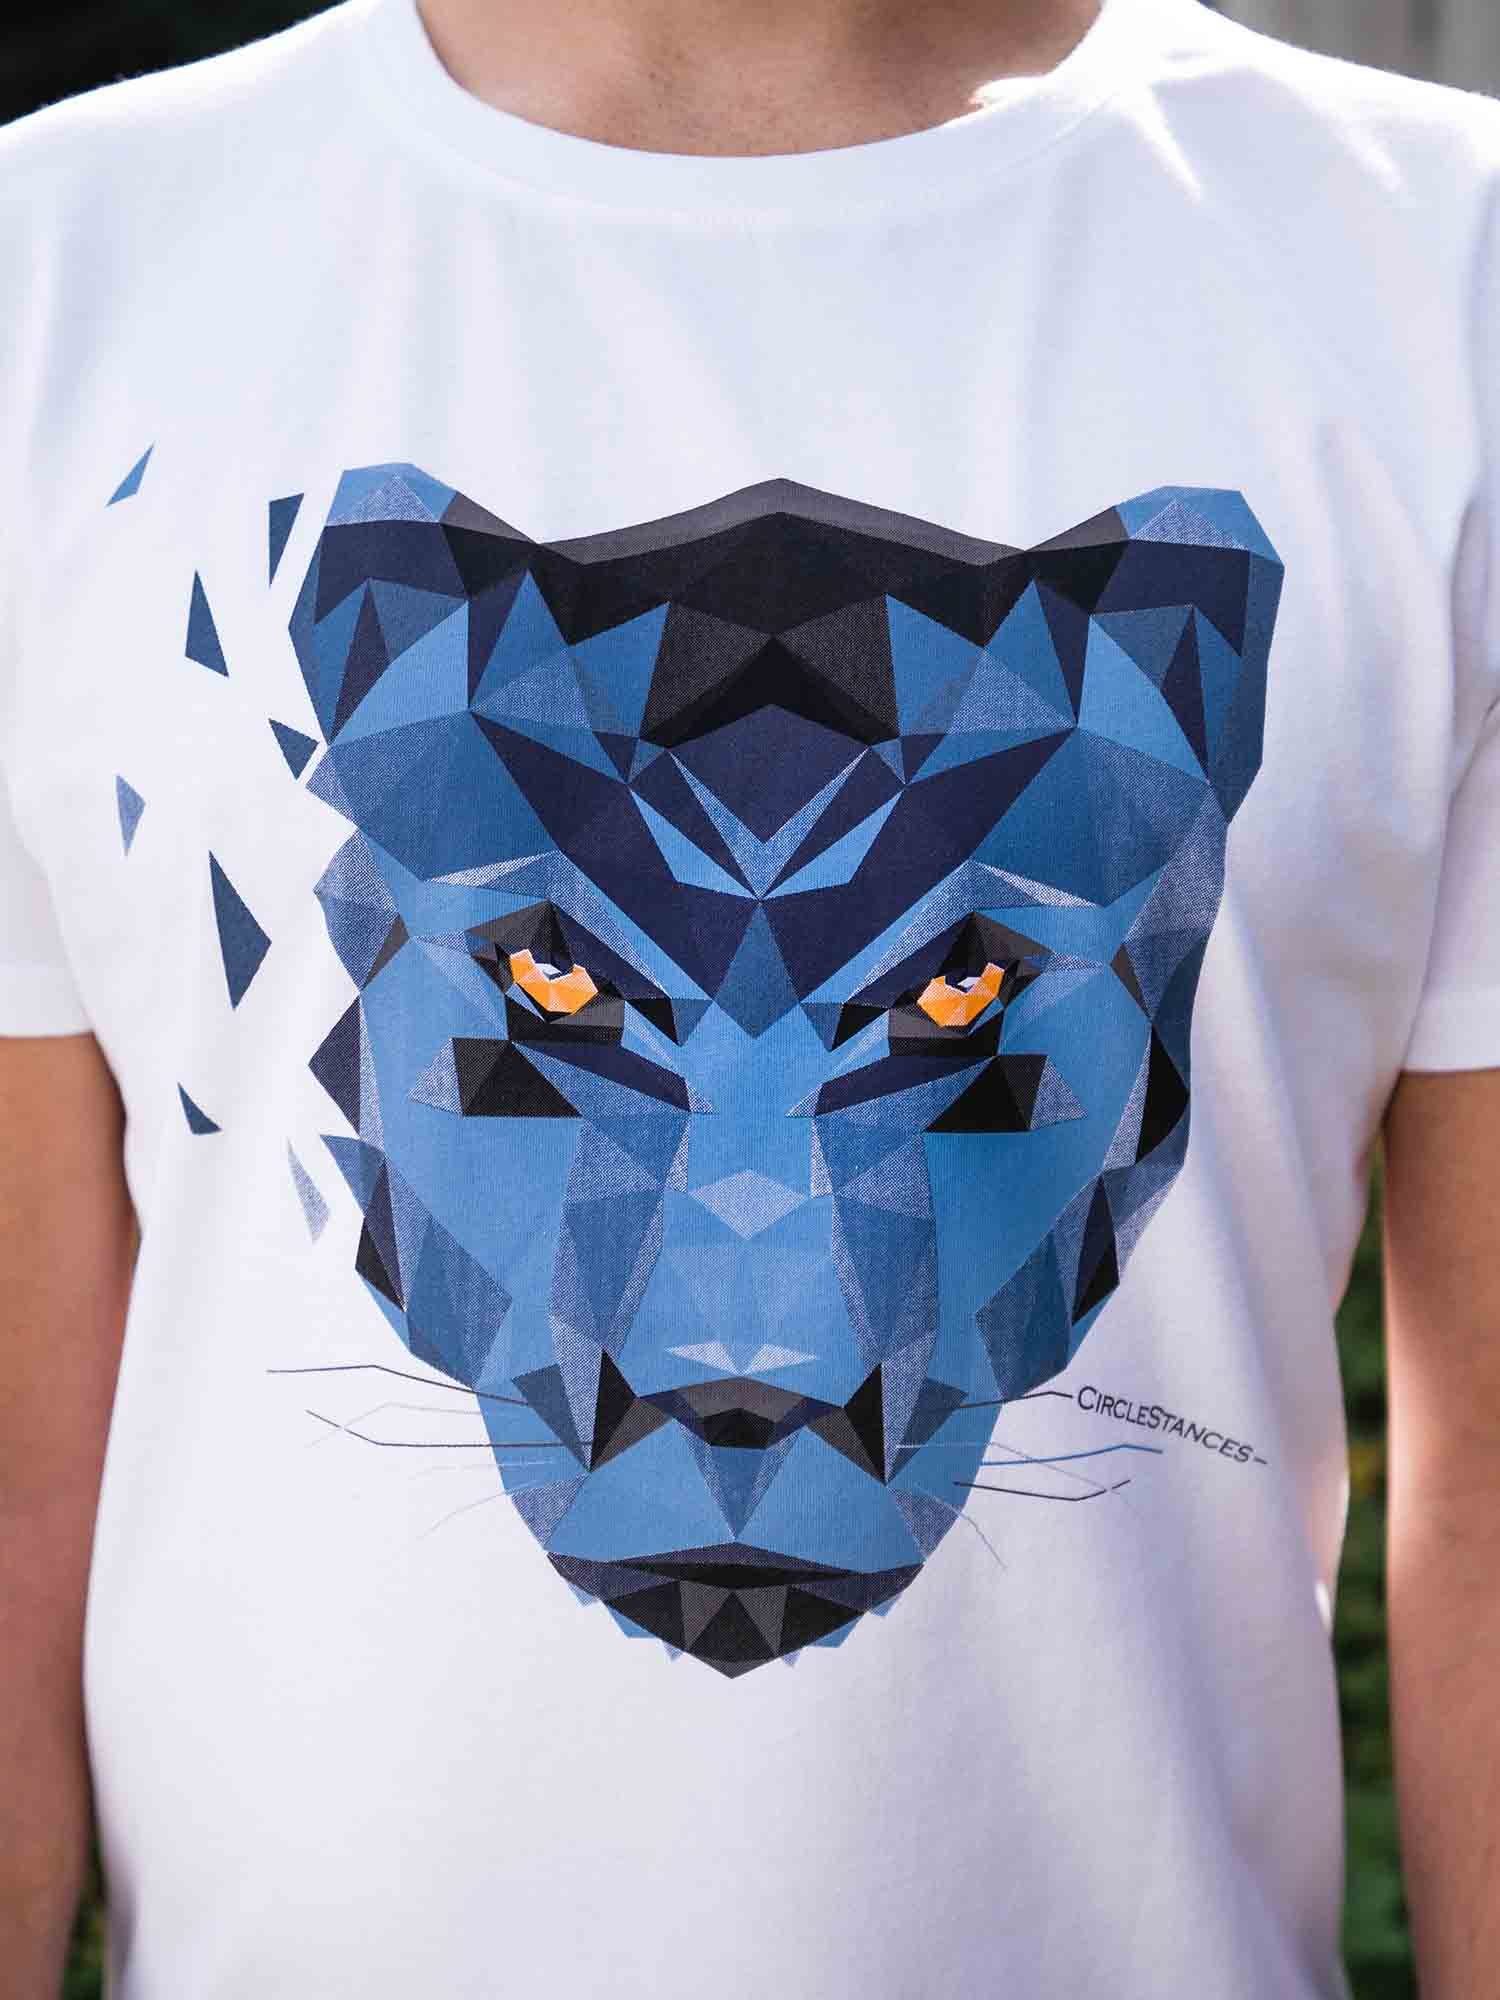 T-Shirt CircleStances Print (Bio) T-Shirt Panther